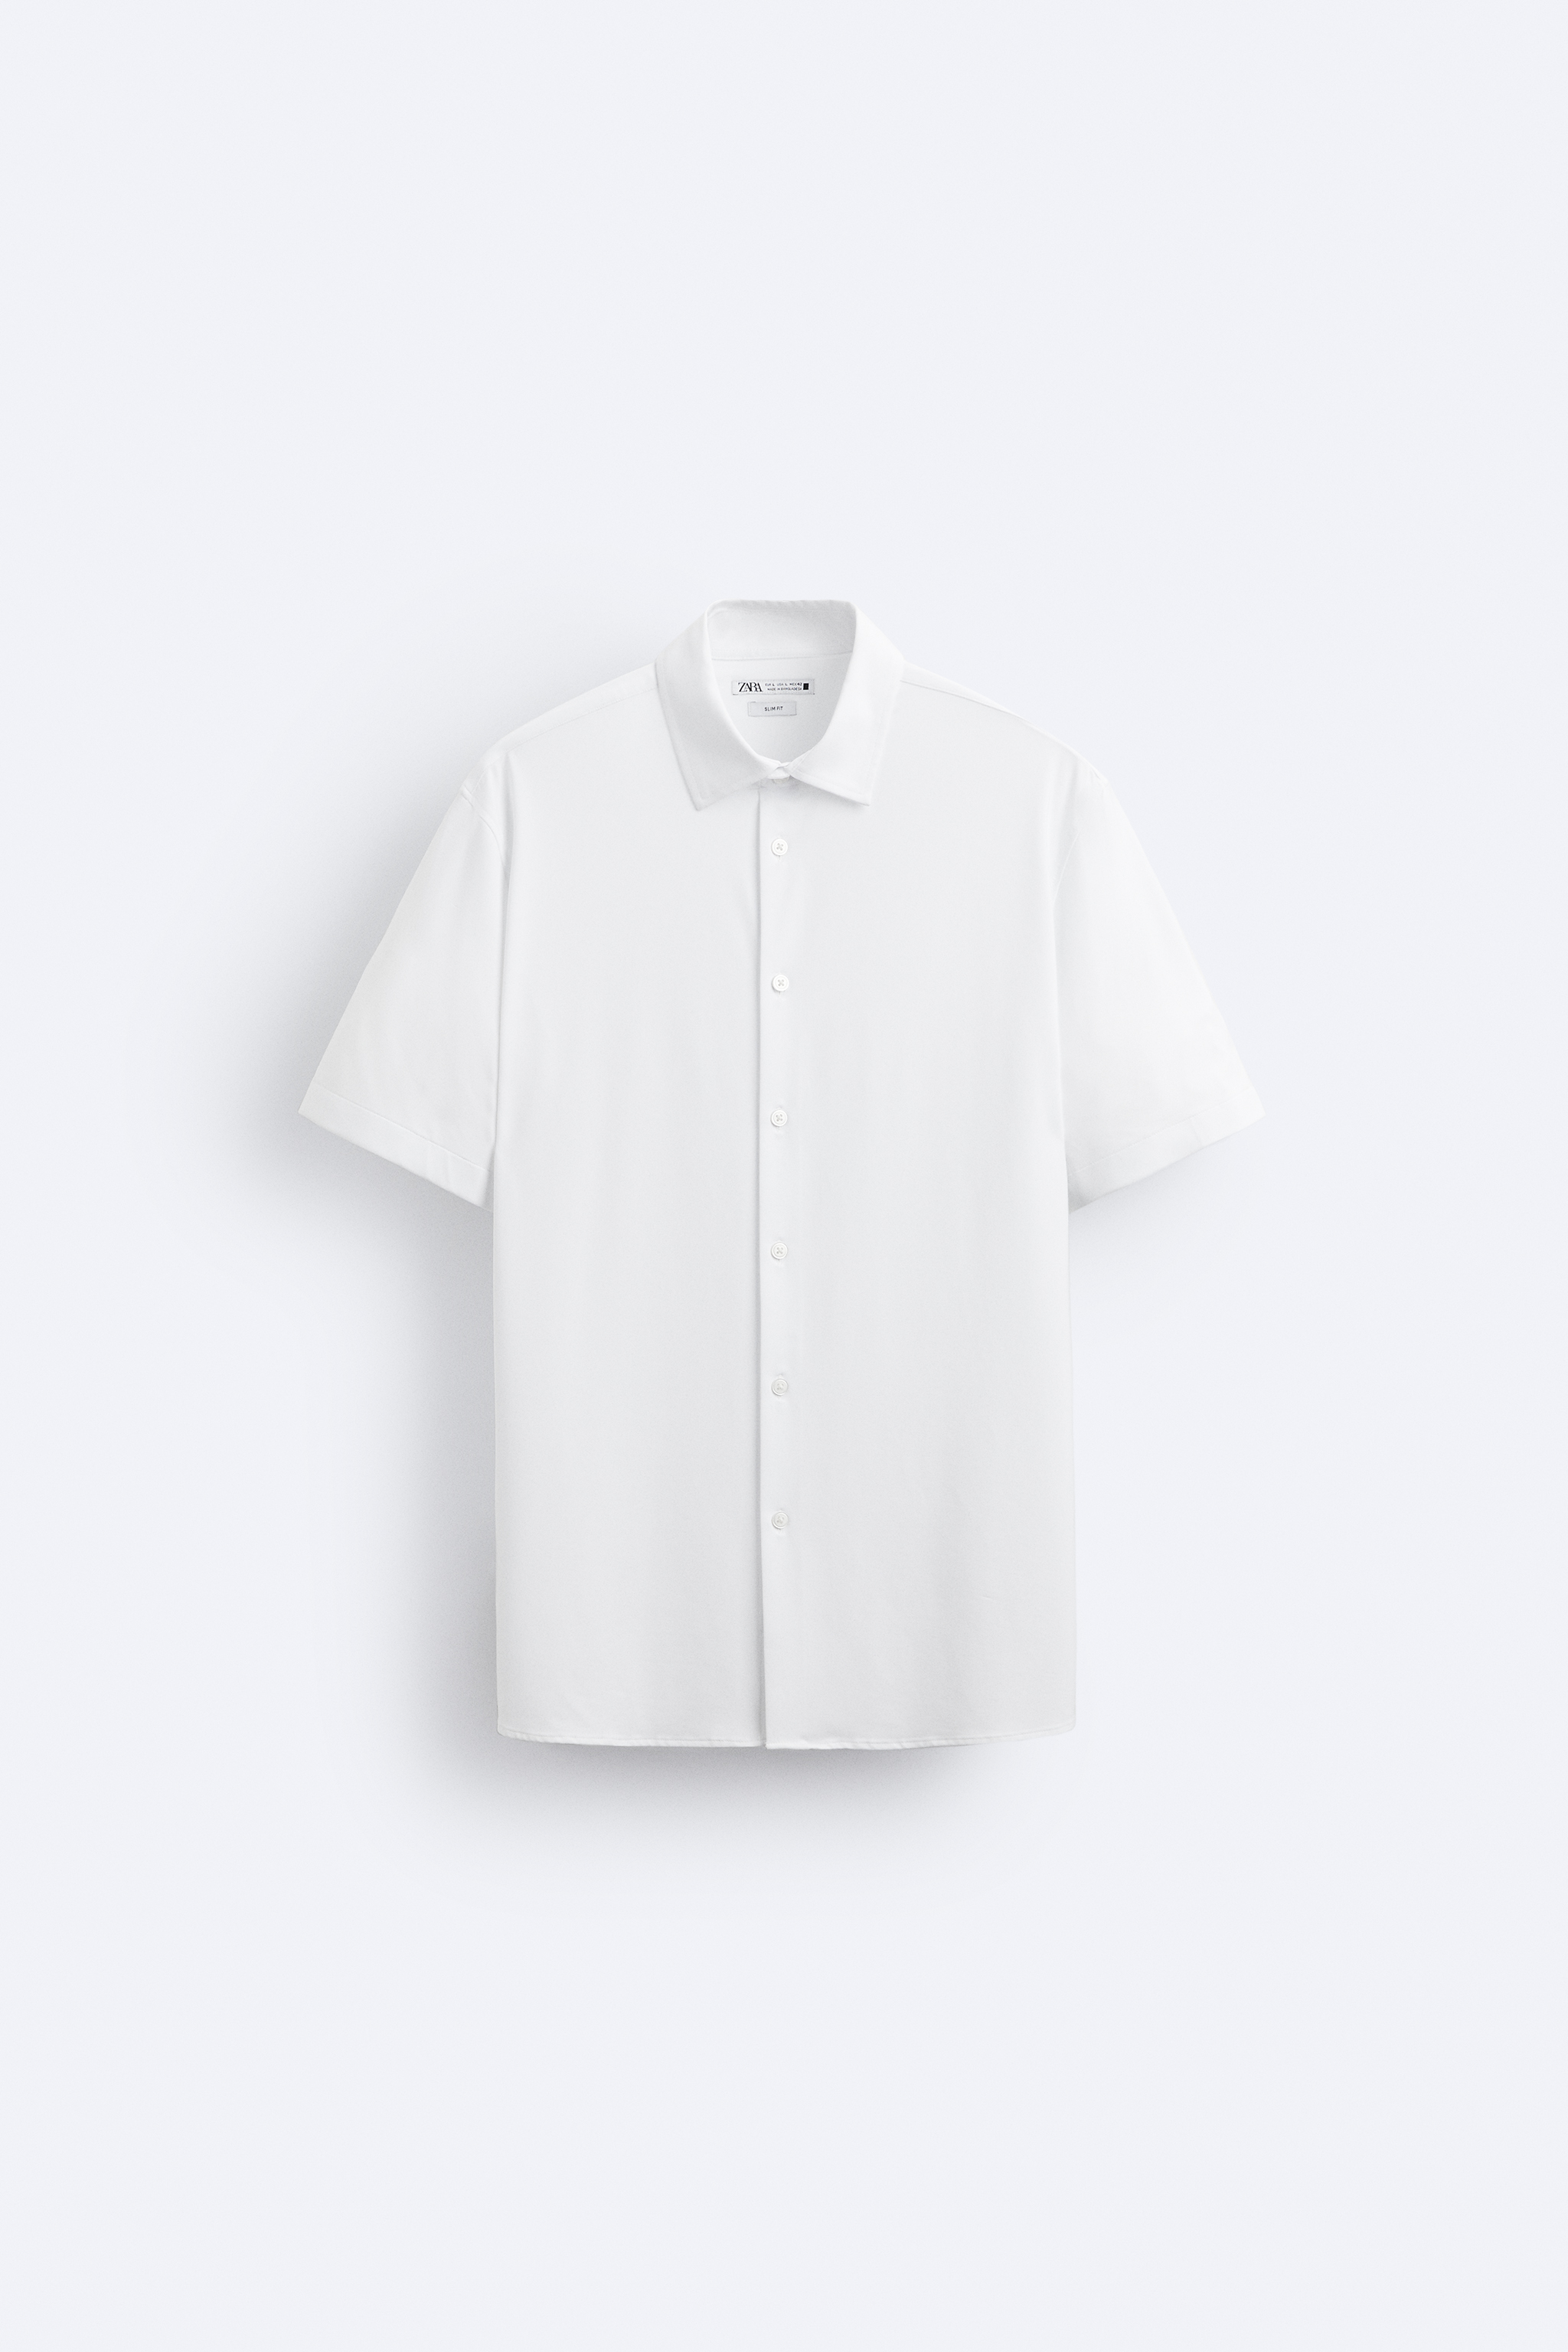 Zara - Stretch Short Sleeve Shirt - Black - Men